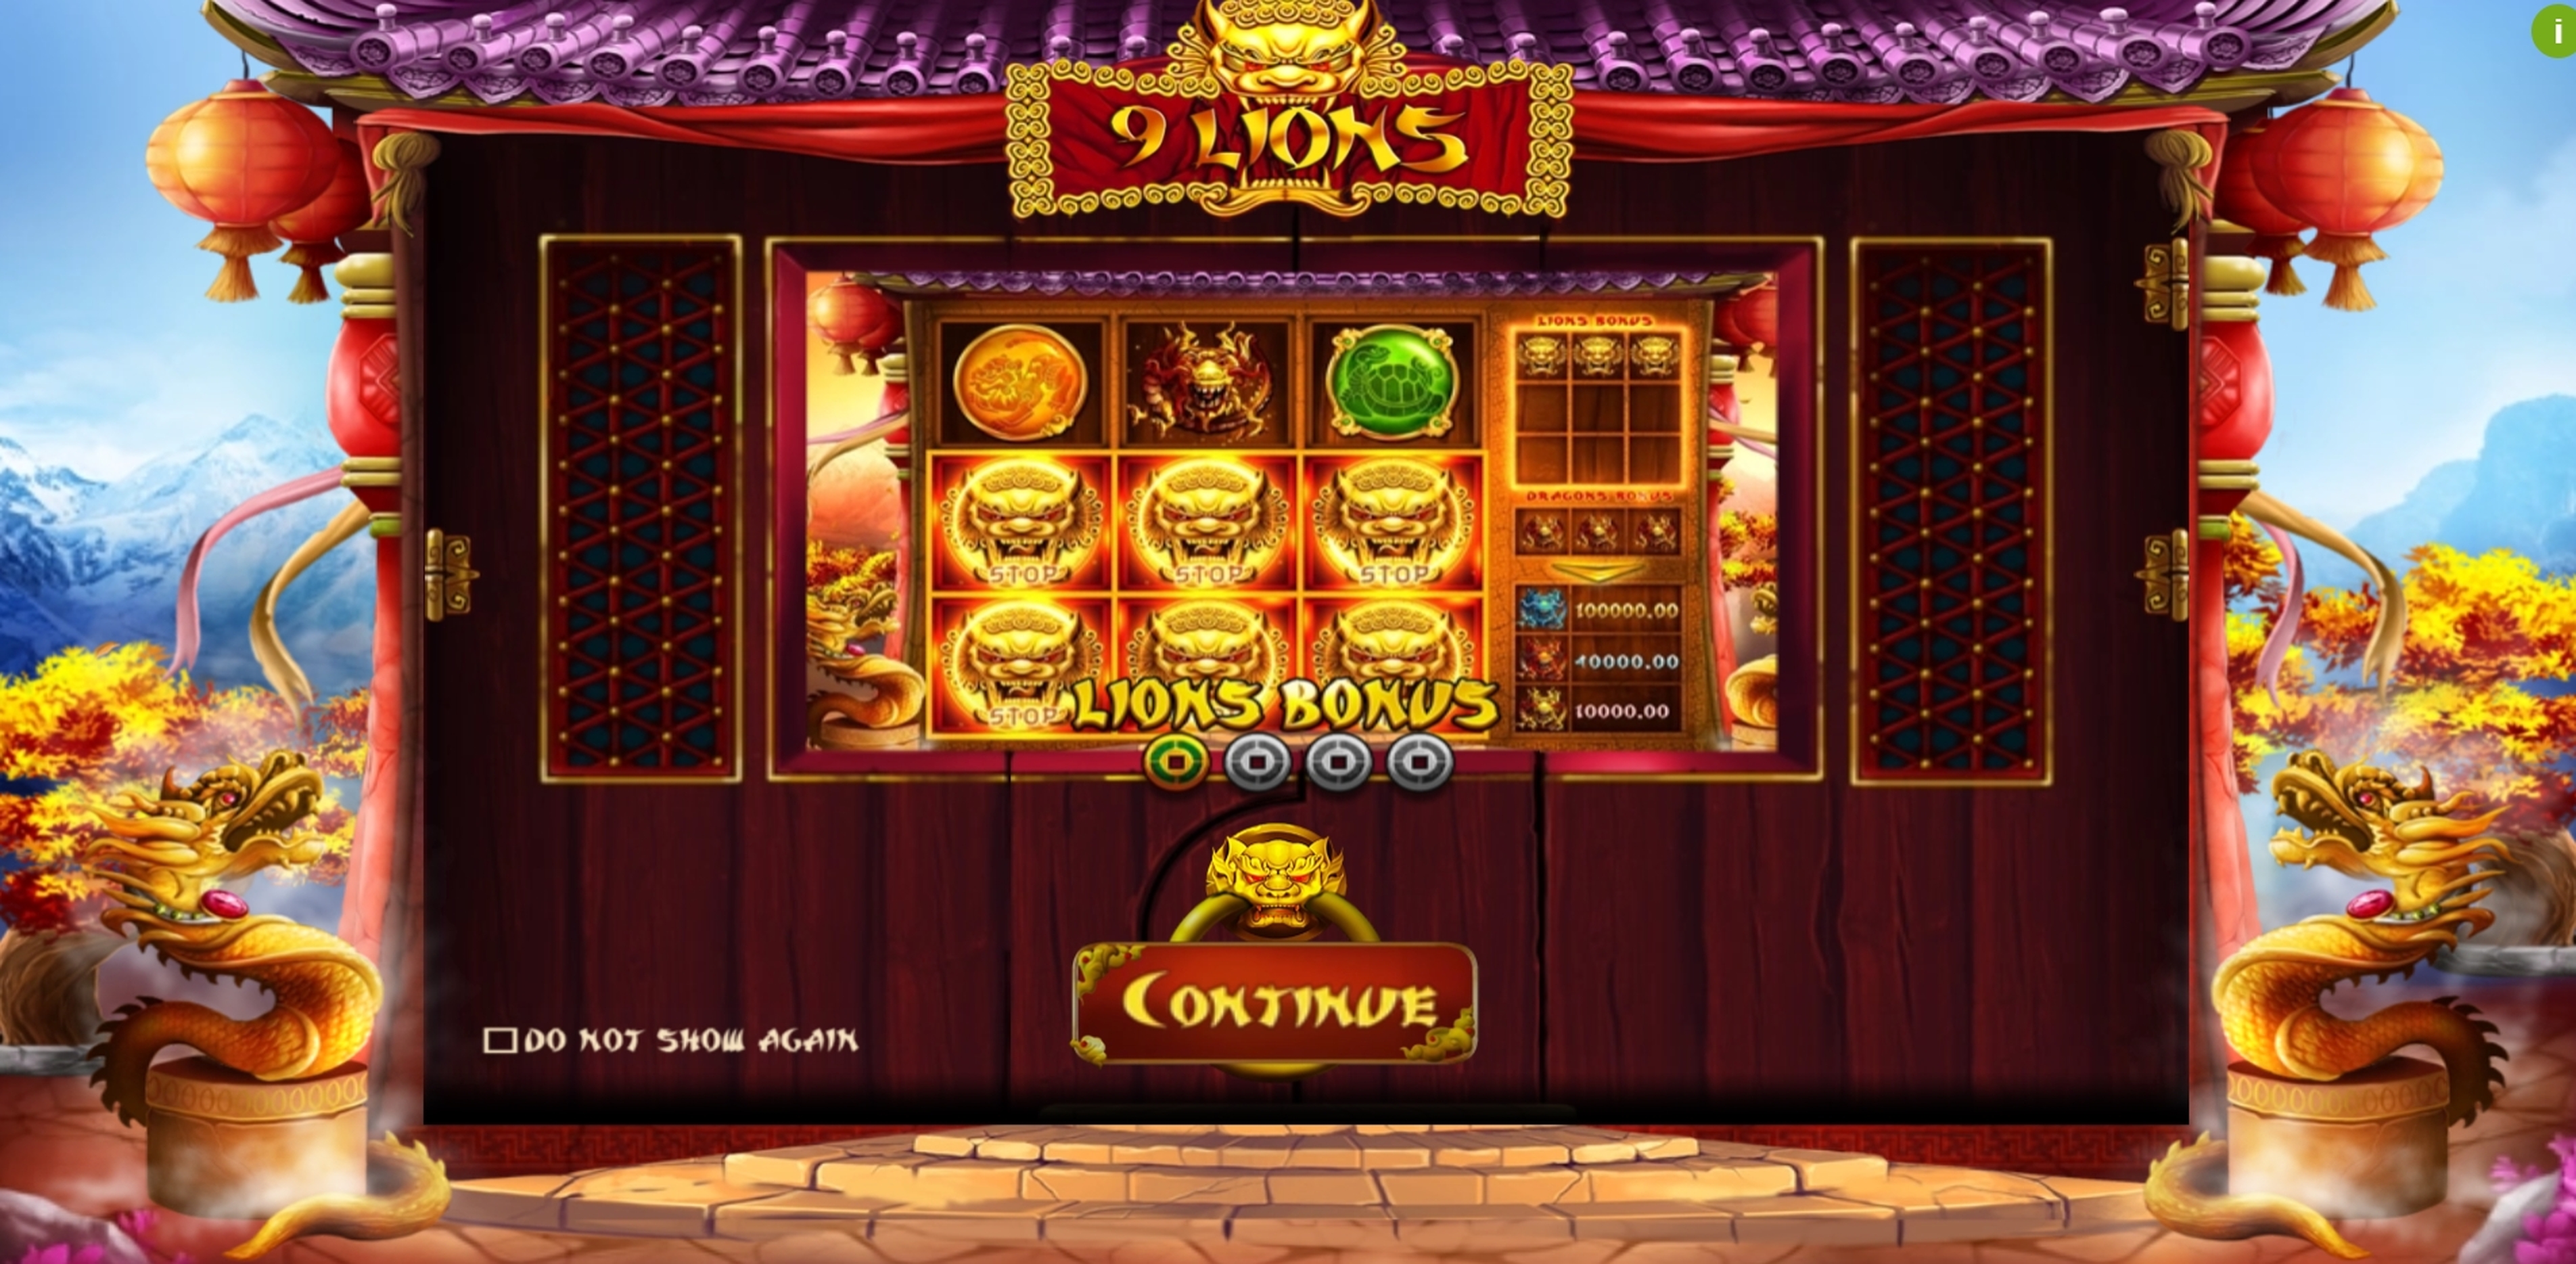 Play 9 Lions Free Casino Slot Game by Wazdan